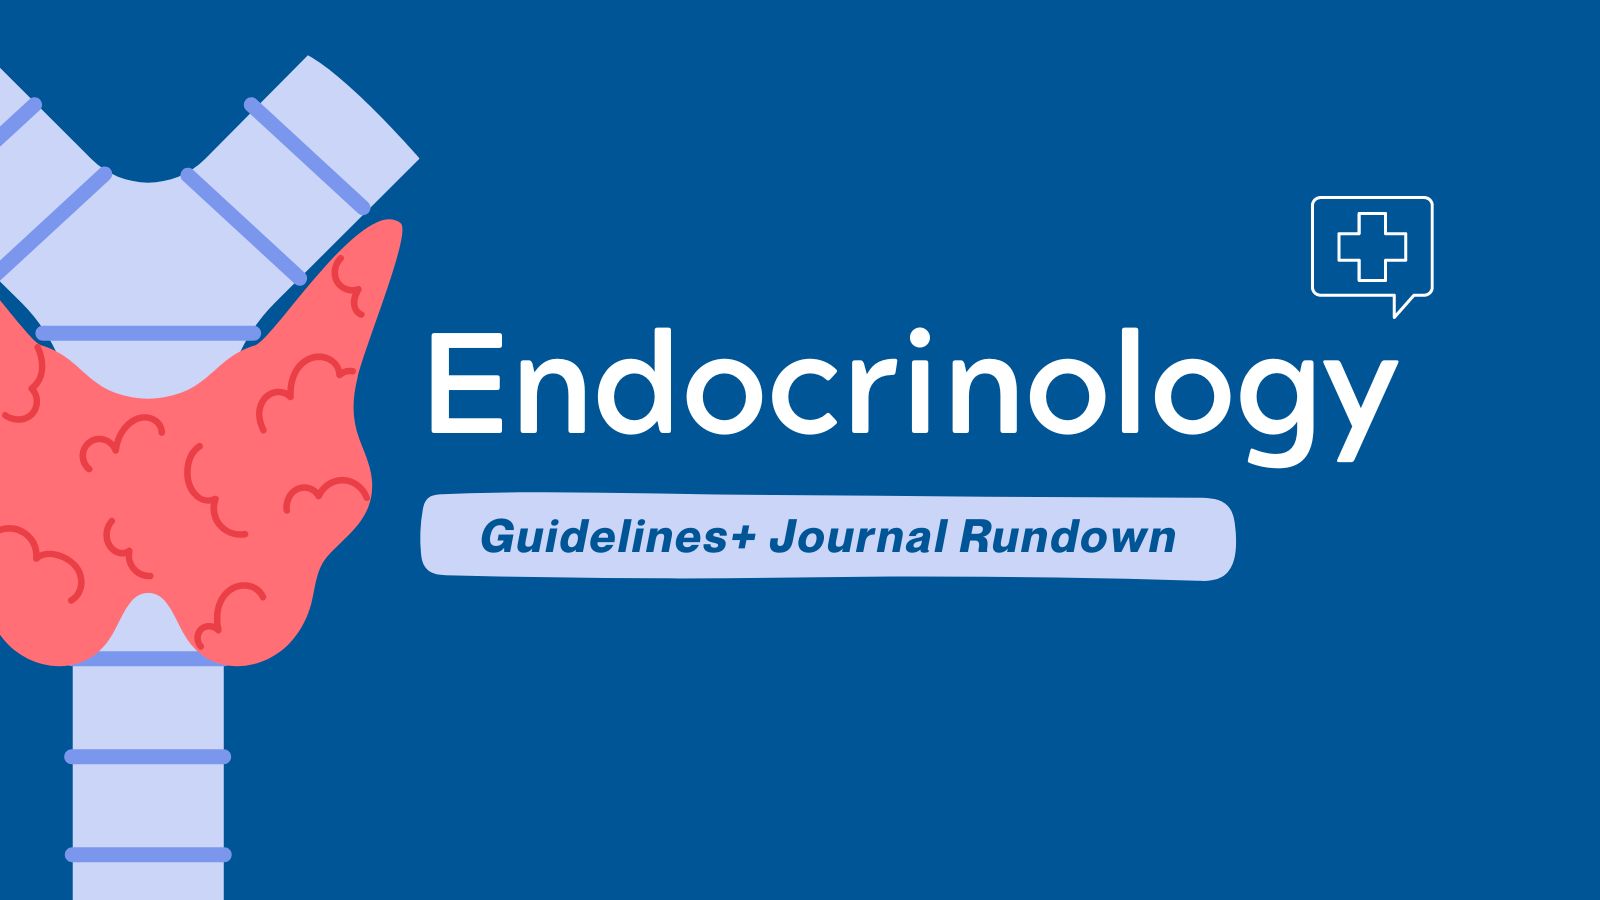 Guidelines+ Journal Rundown Endocrinology